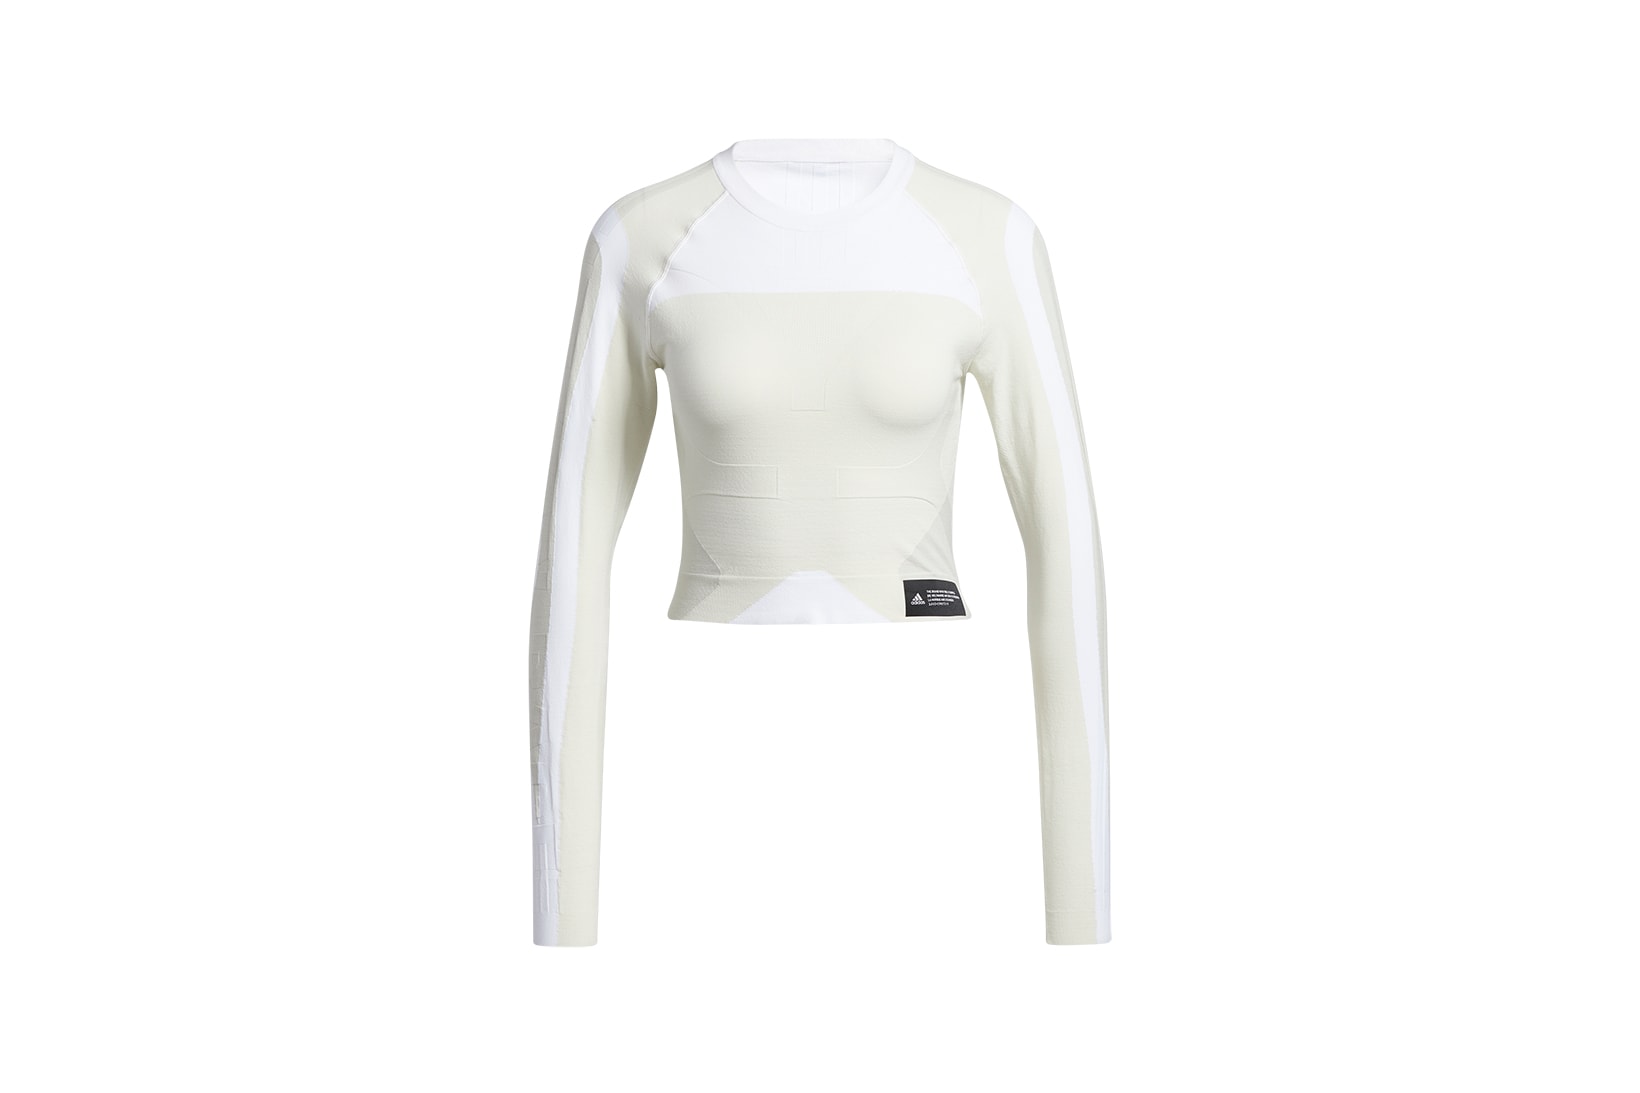 adidas pharrell williams pw primeknit fine collaboration activewear white long sleeve top